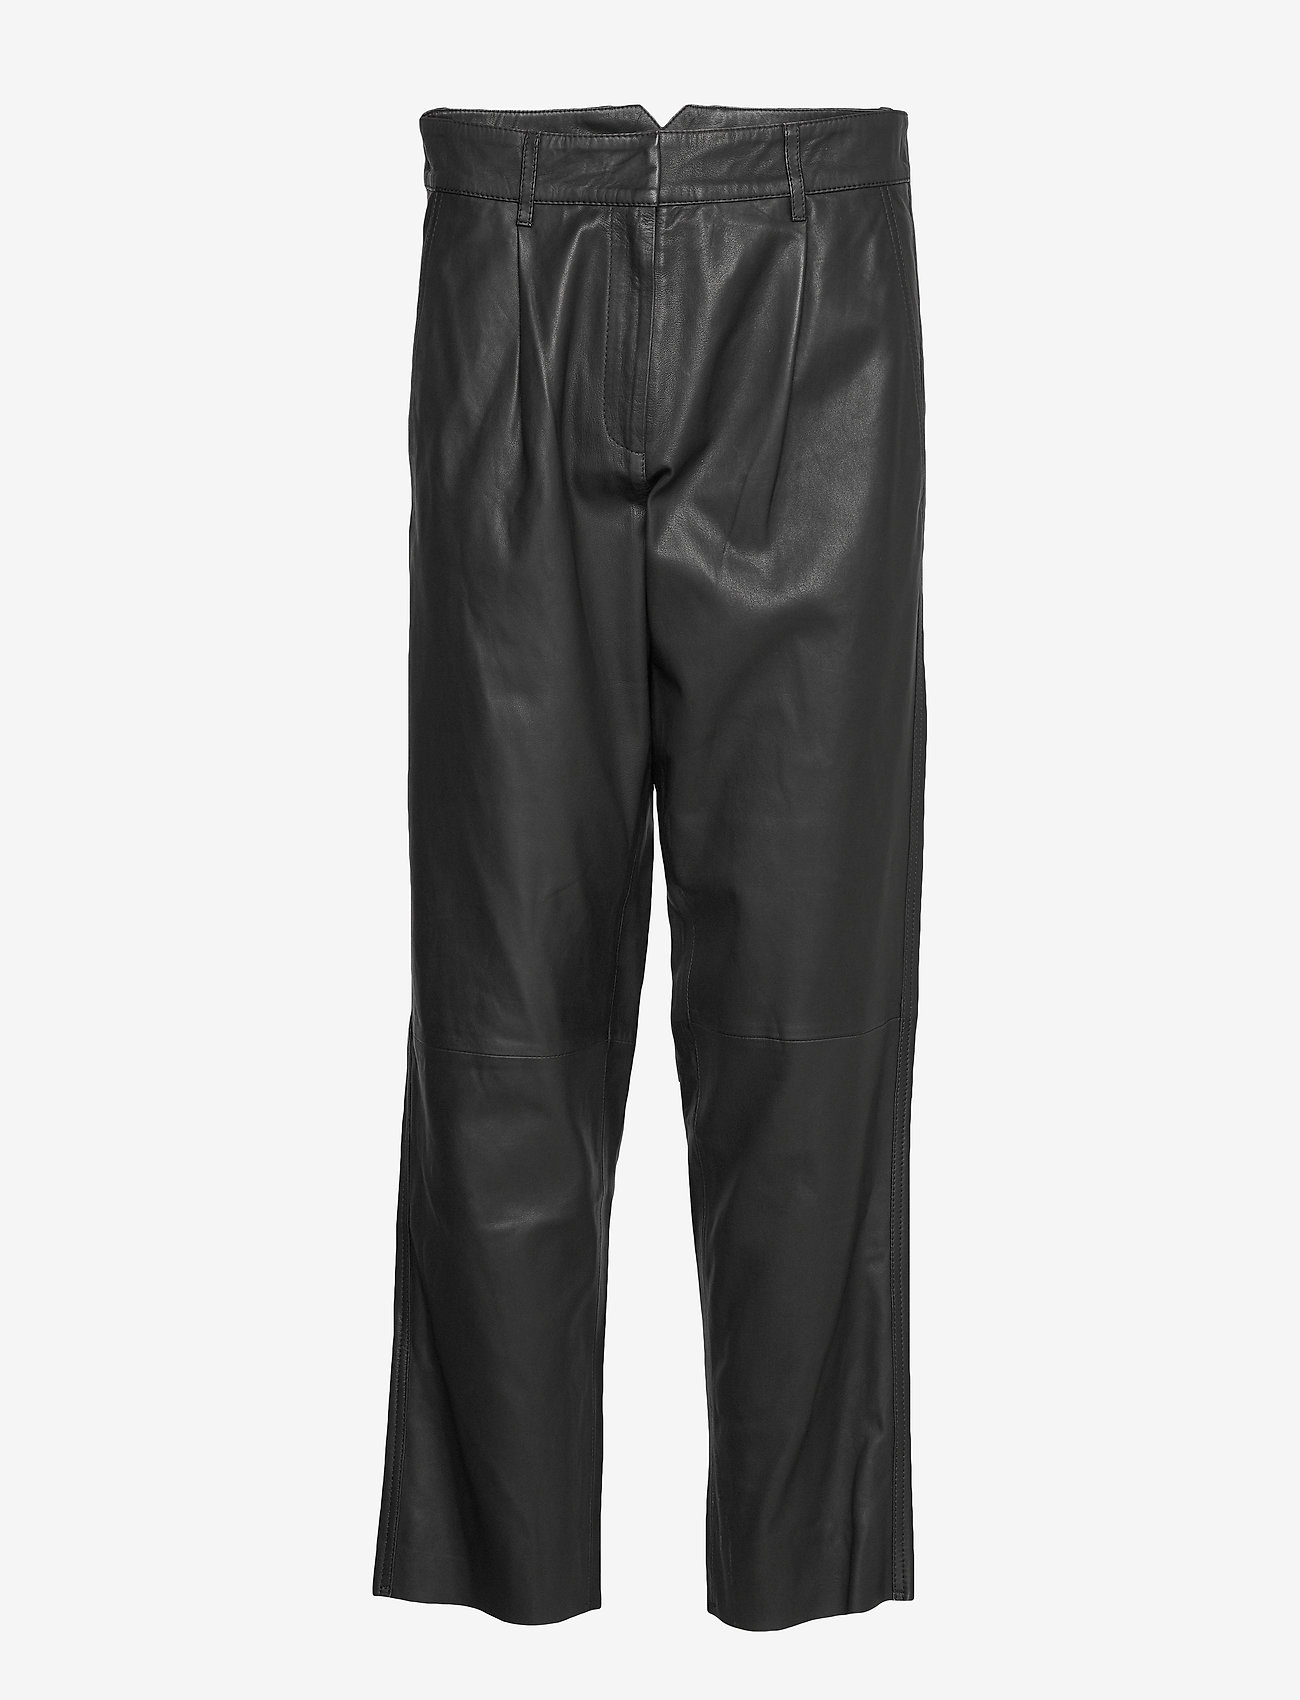 MDK / Munderingskompagniet - Iris leather pants - leather trousers - black - 0